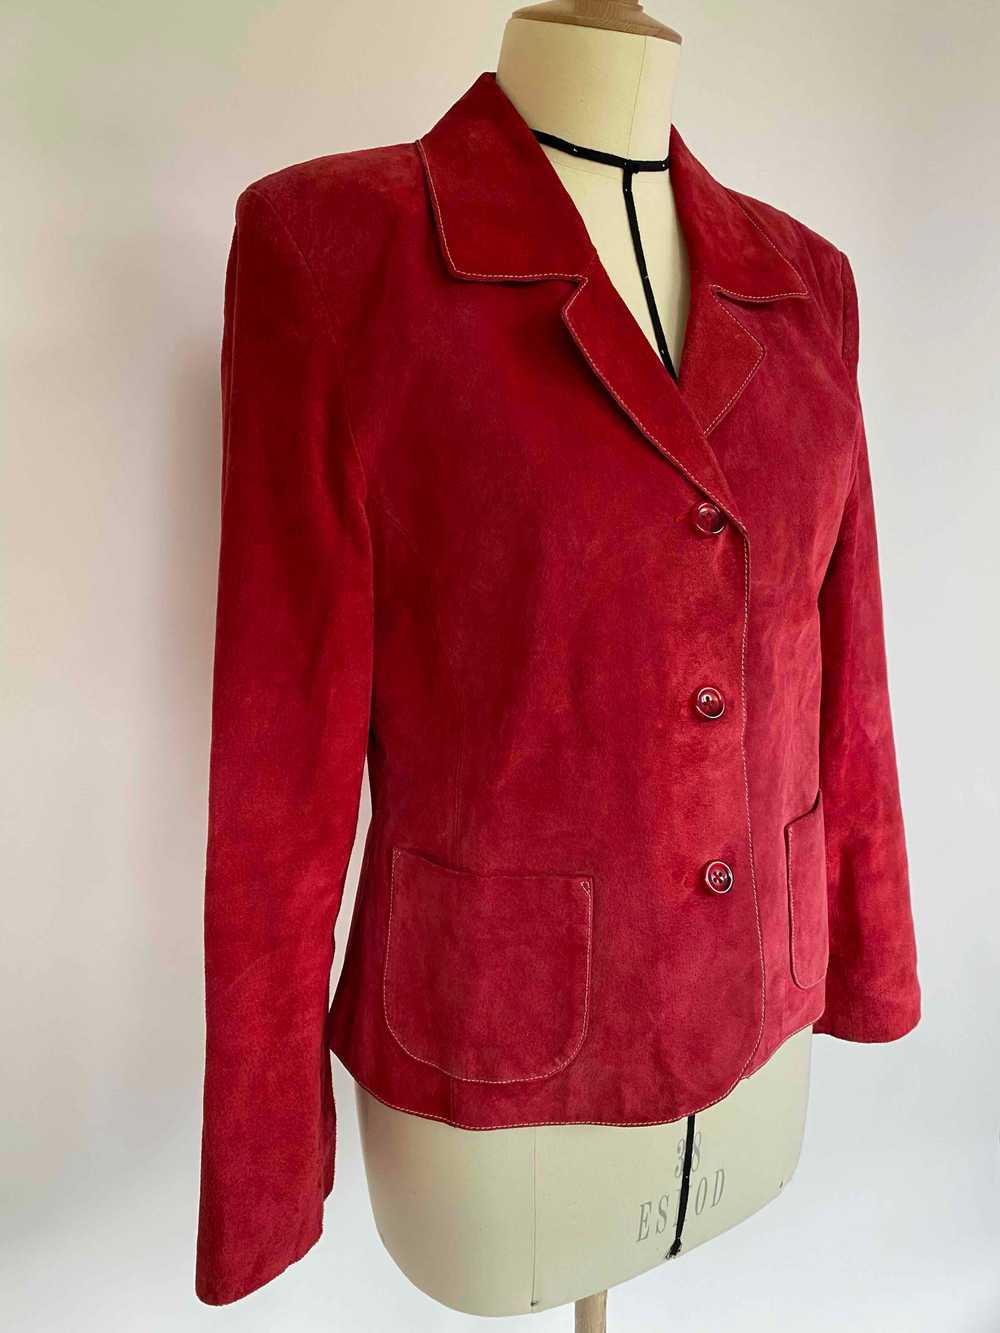 Suede jacket - Red suede jacket (100% pork rind),… - image 3